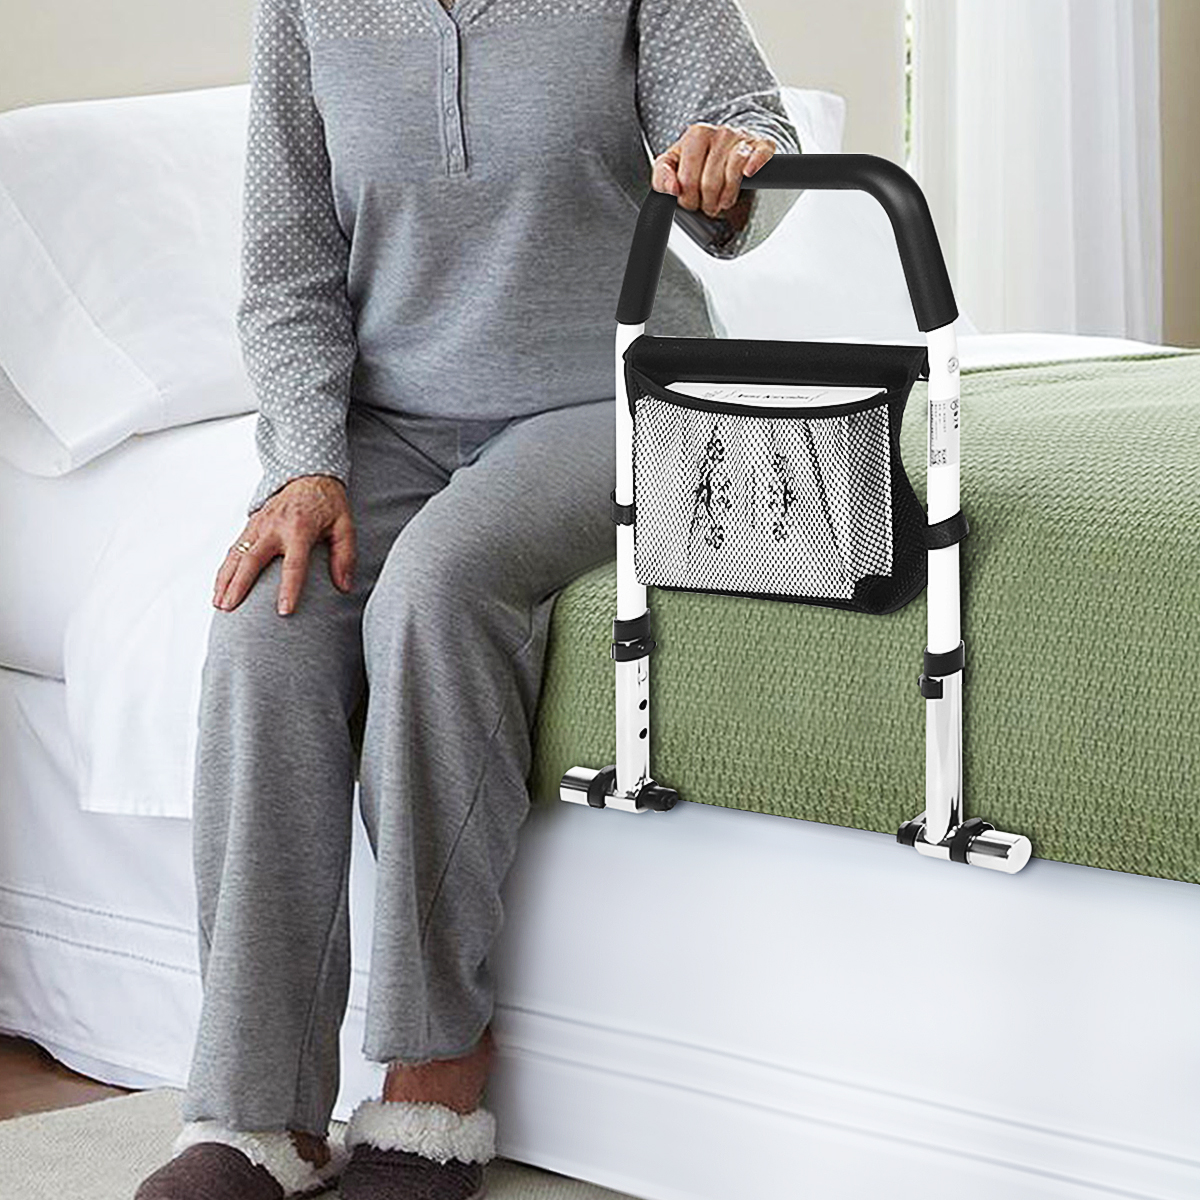 Adjustable-Bed-Rail-Bedside-Assist-Handrail-Handle-for-Elderly-Patients-Pregnants-1785253-3